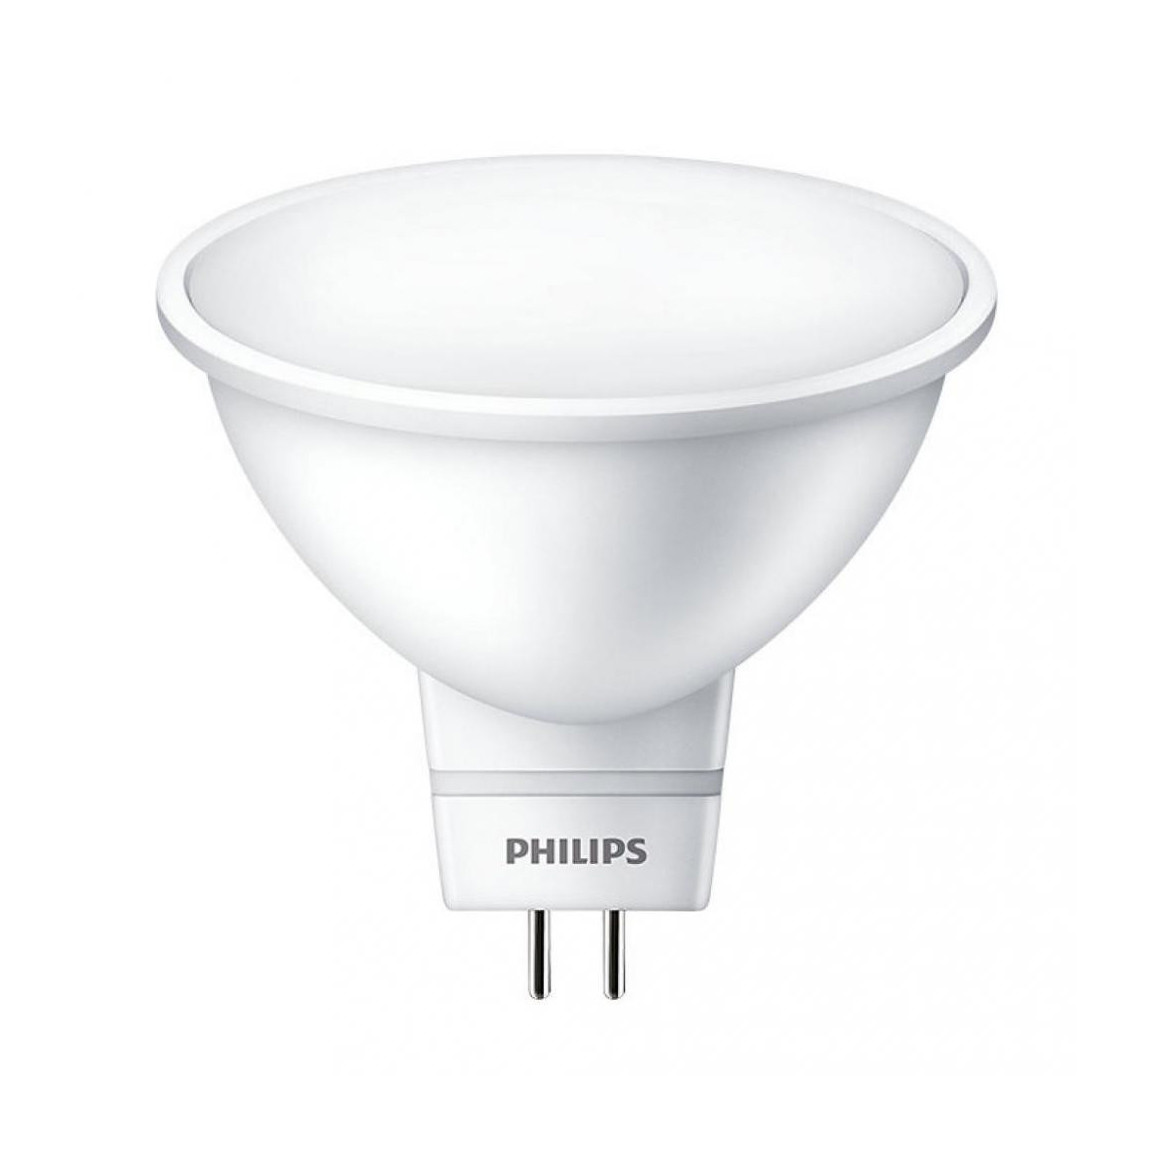 Philips LED Spot 5-50W 120D 6500K 220V (929001844708) - зображення 1